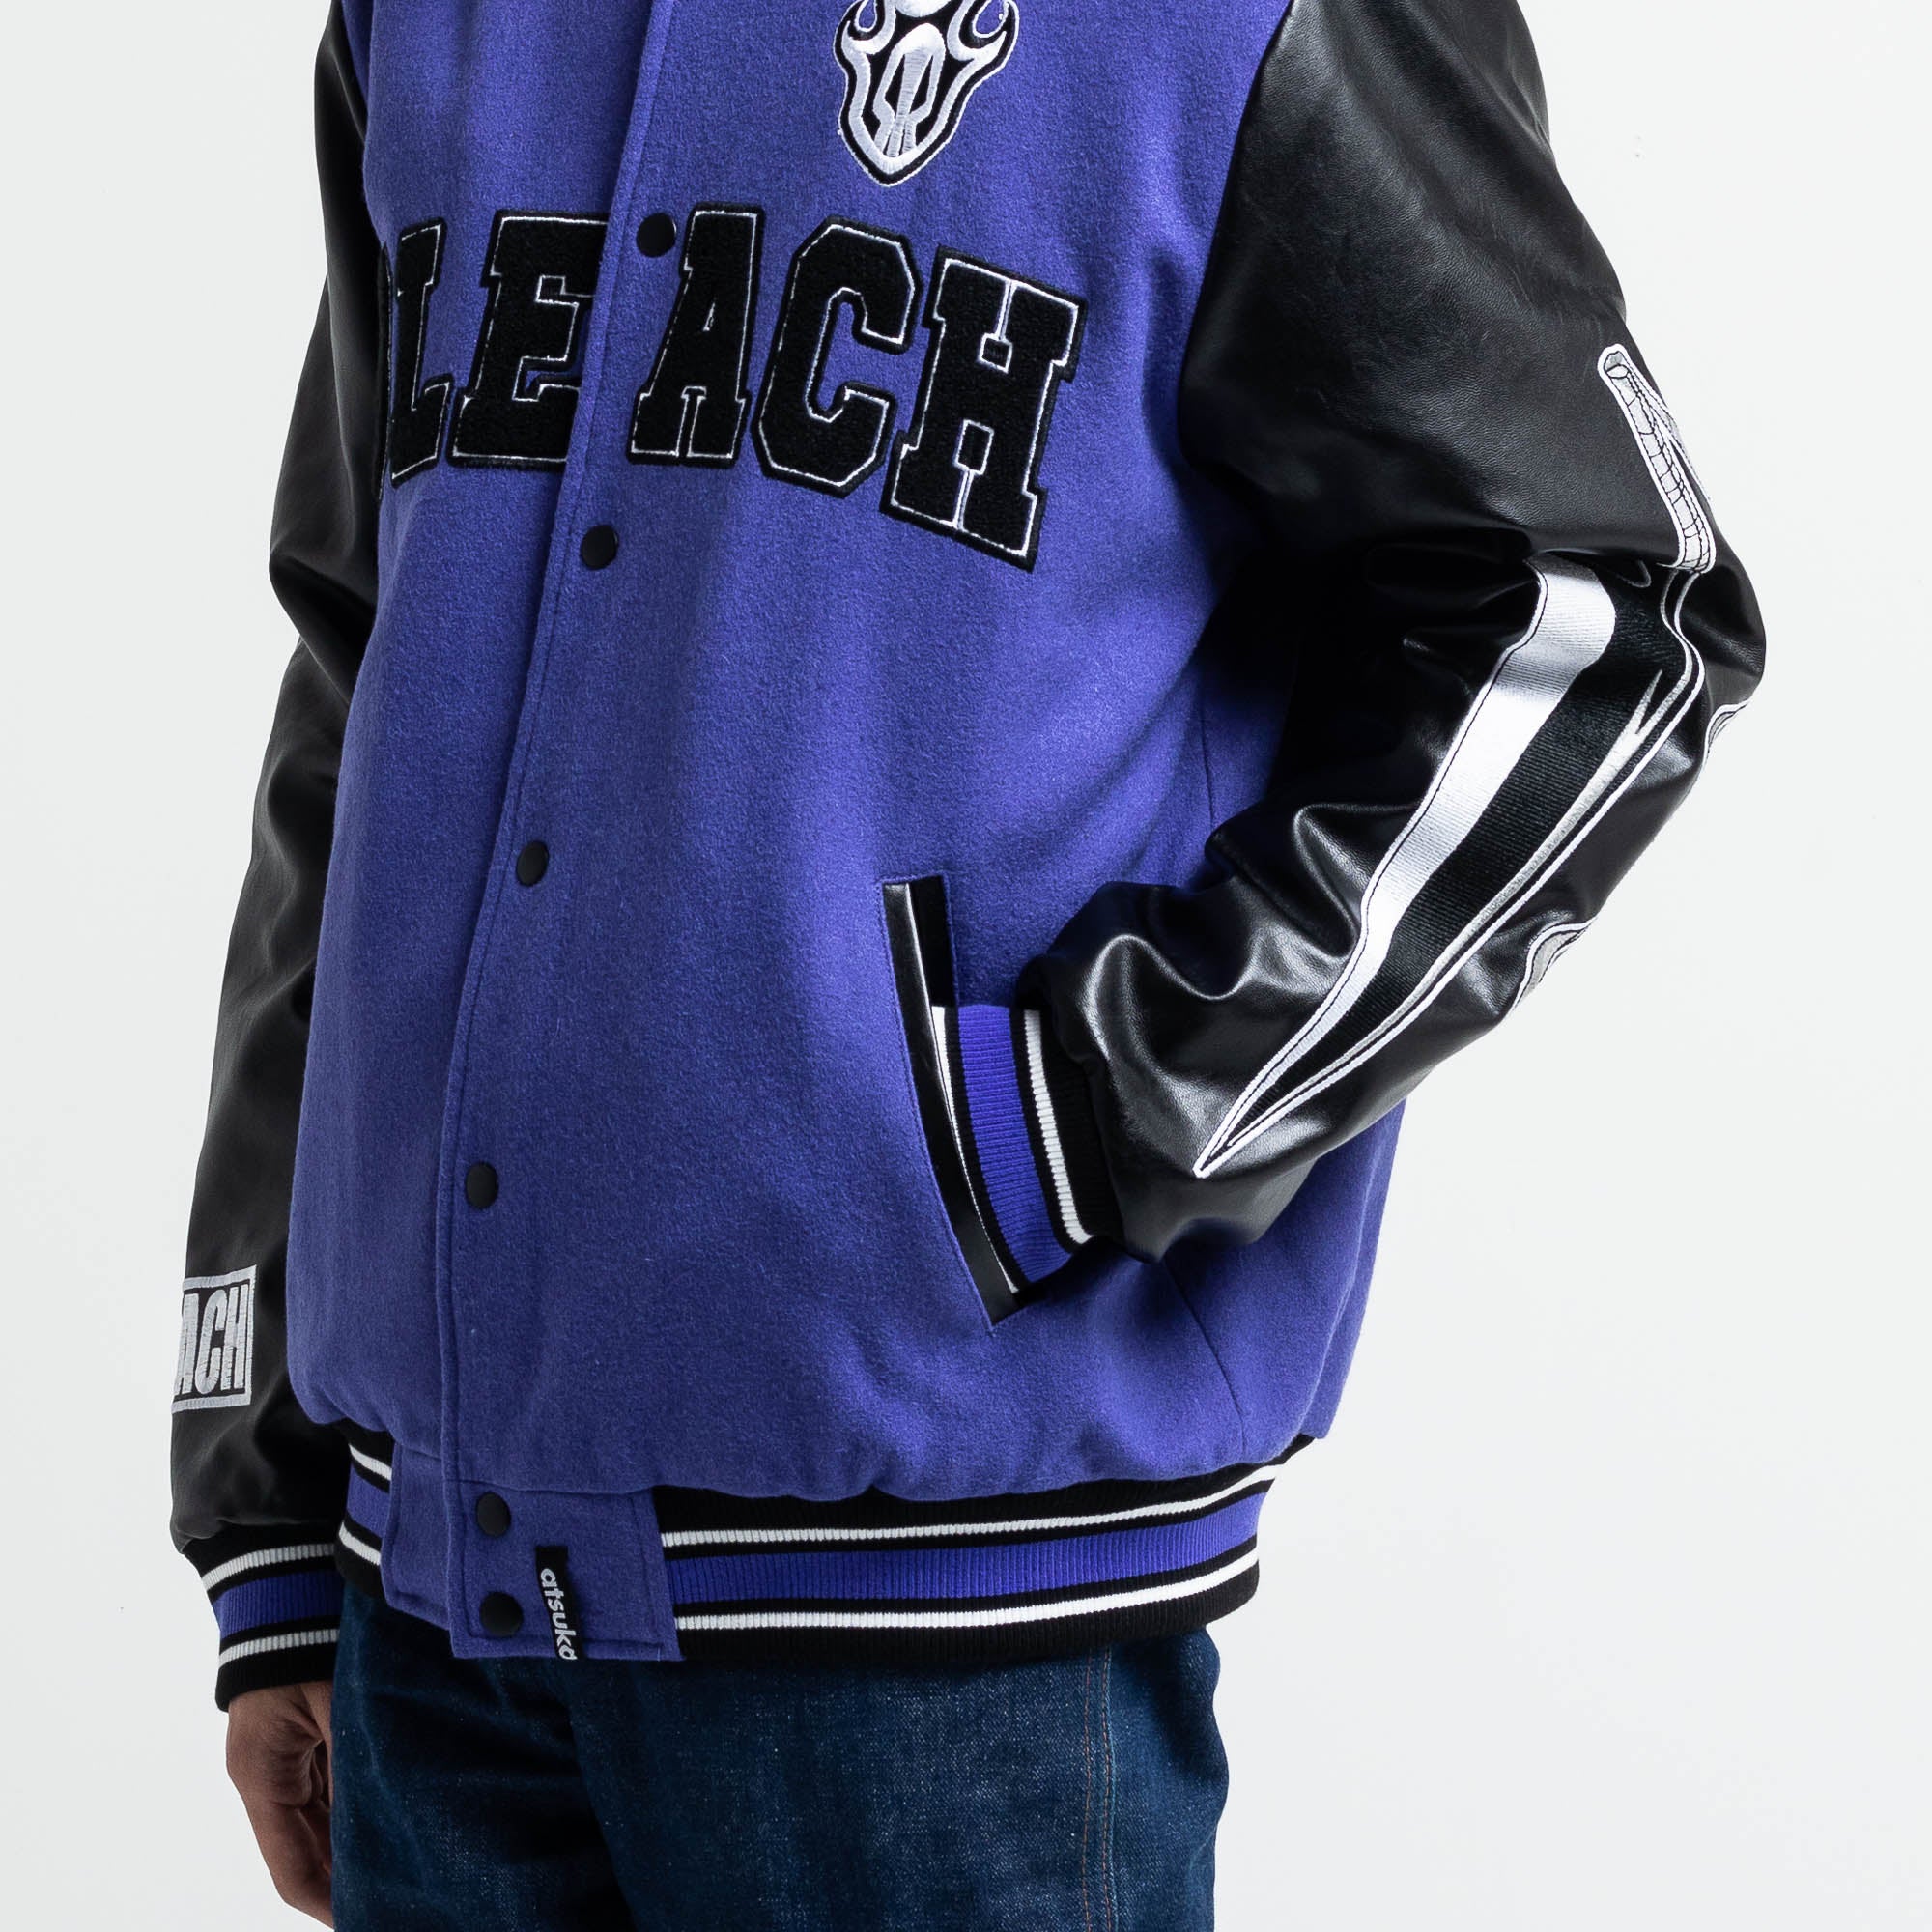 Ichigo Kurosaki Purple Varsity Jacket